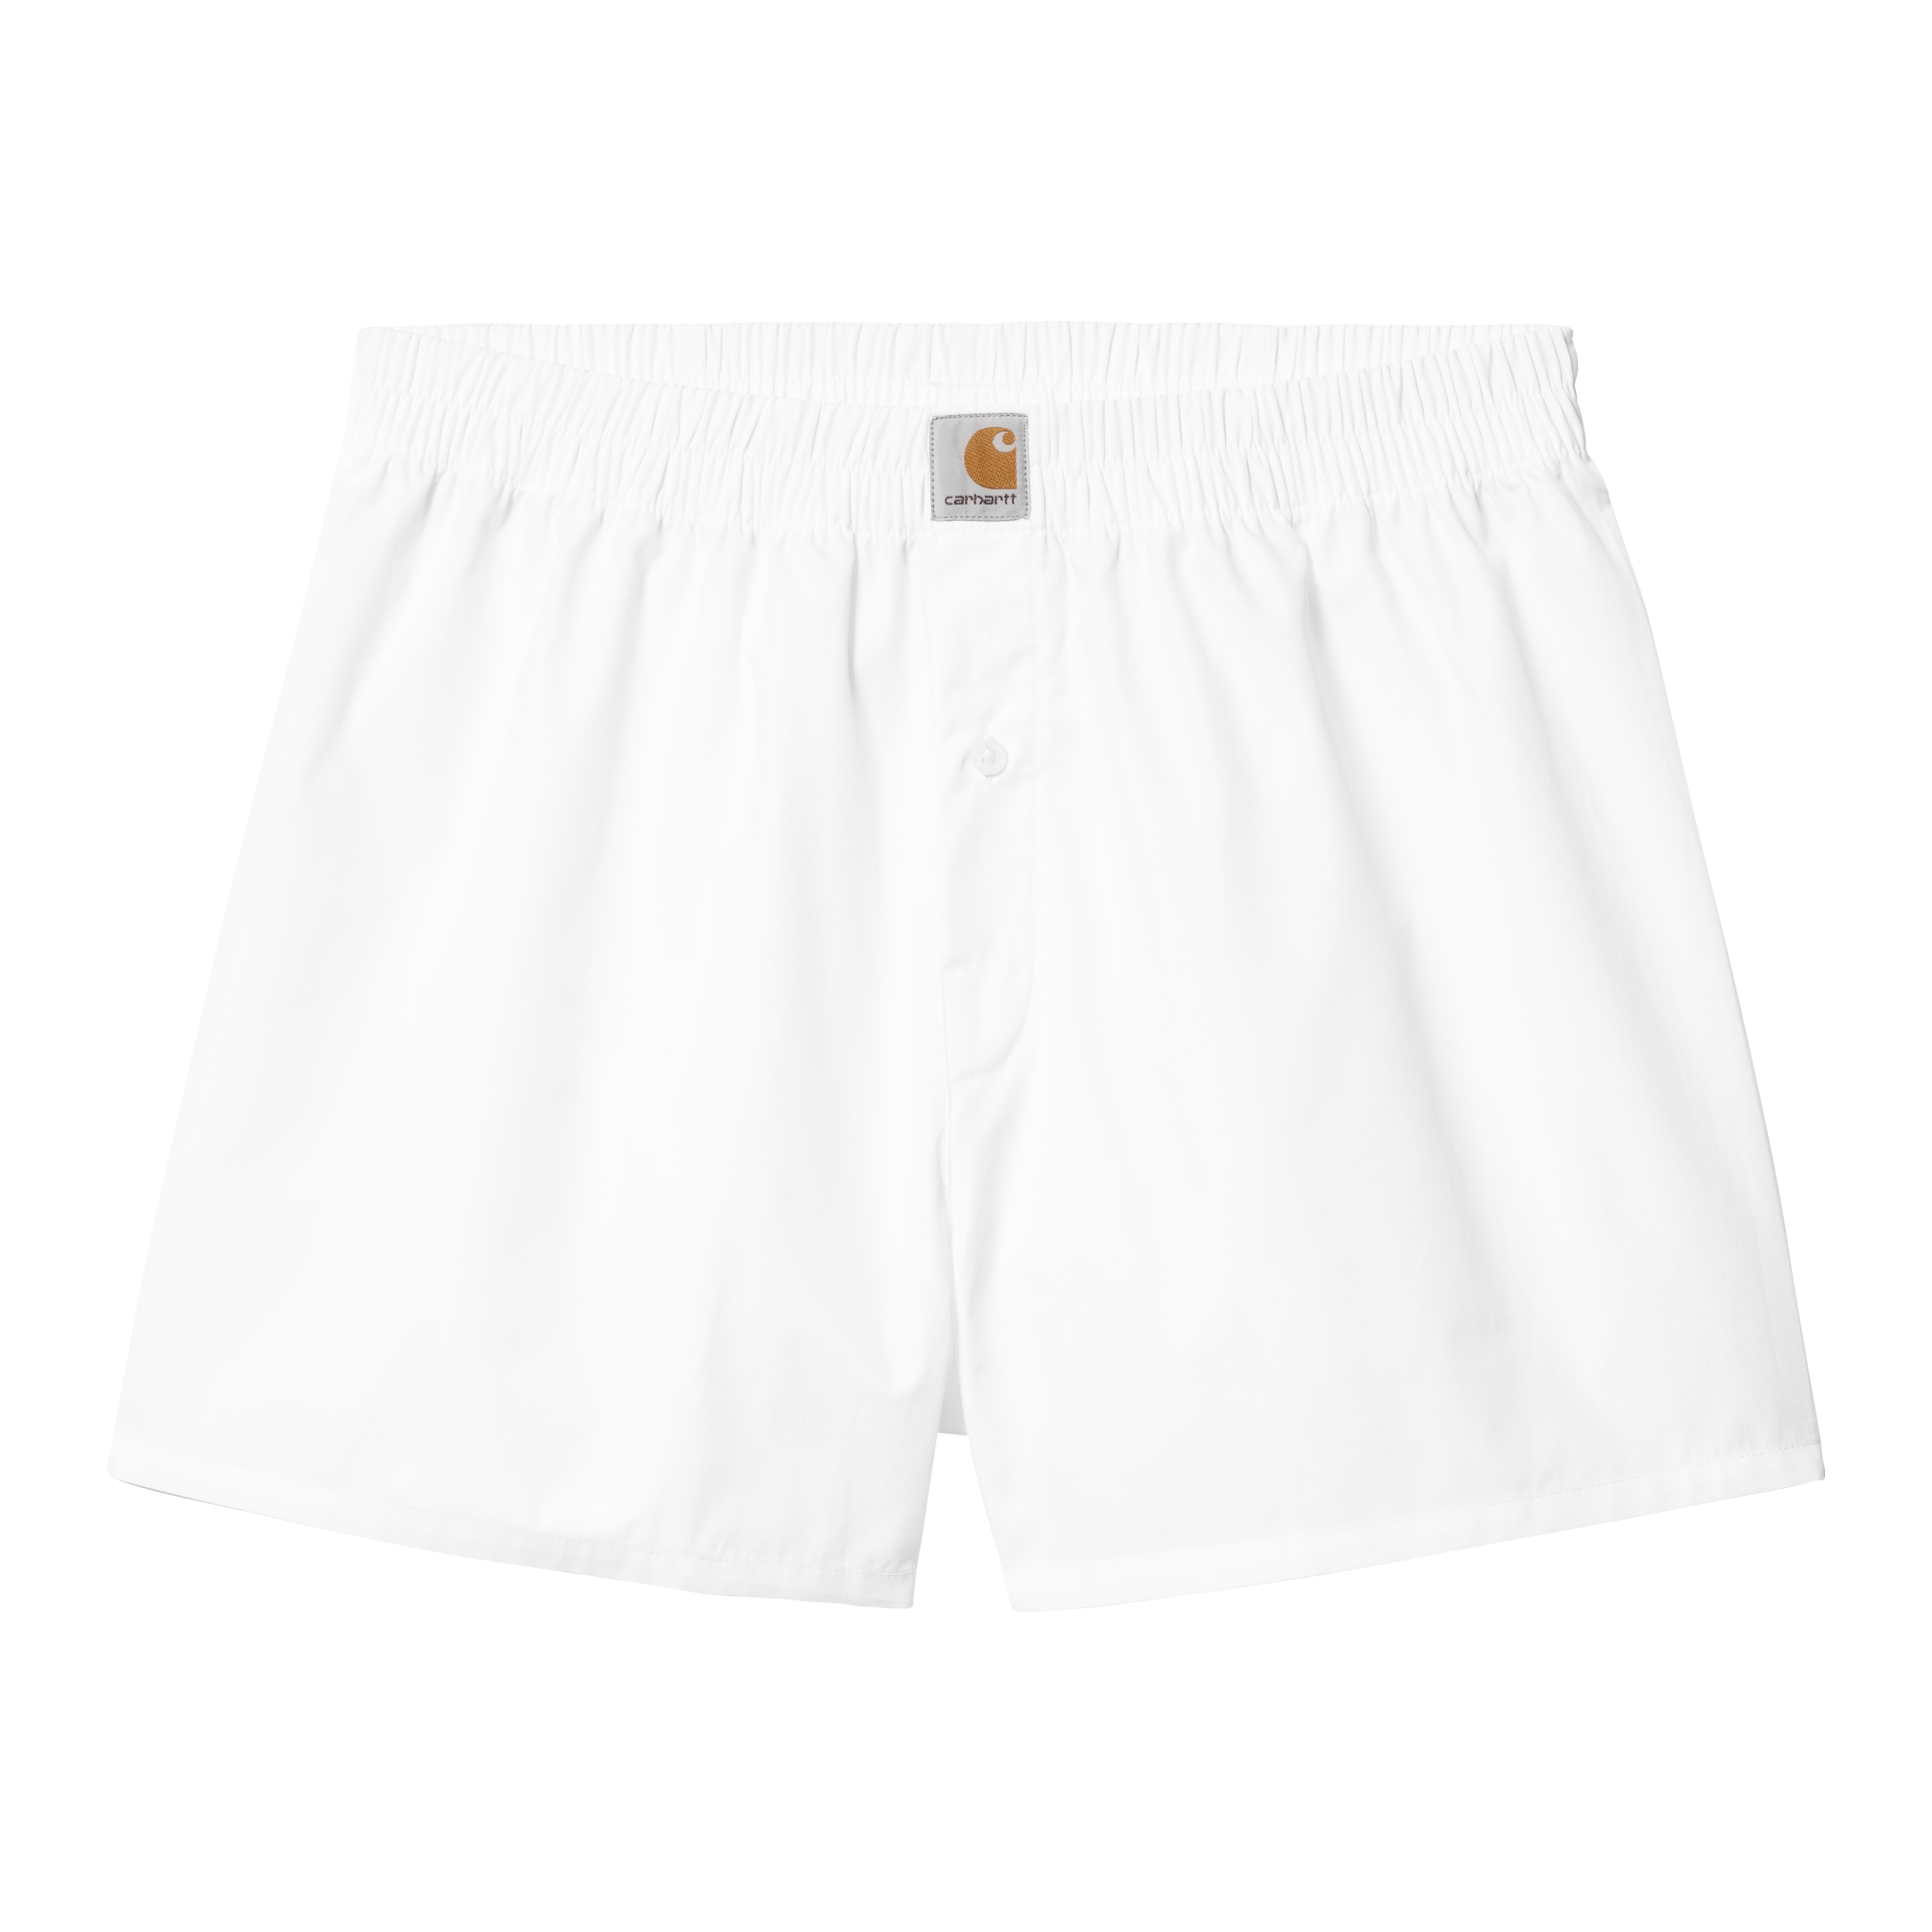 Carhartt WIP cotton boxer shorts black color